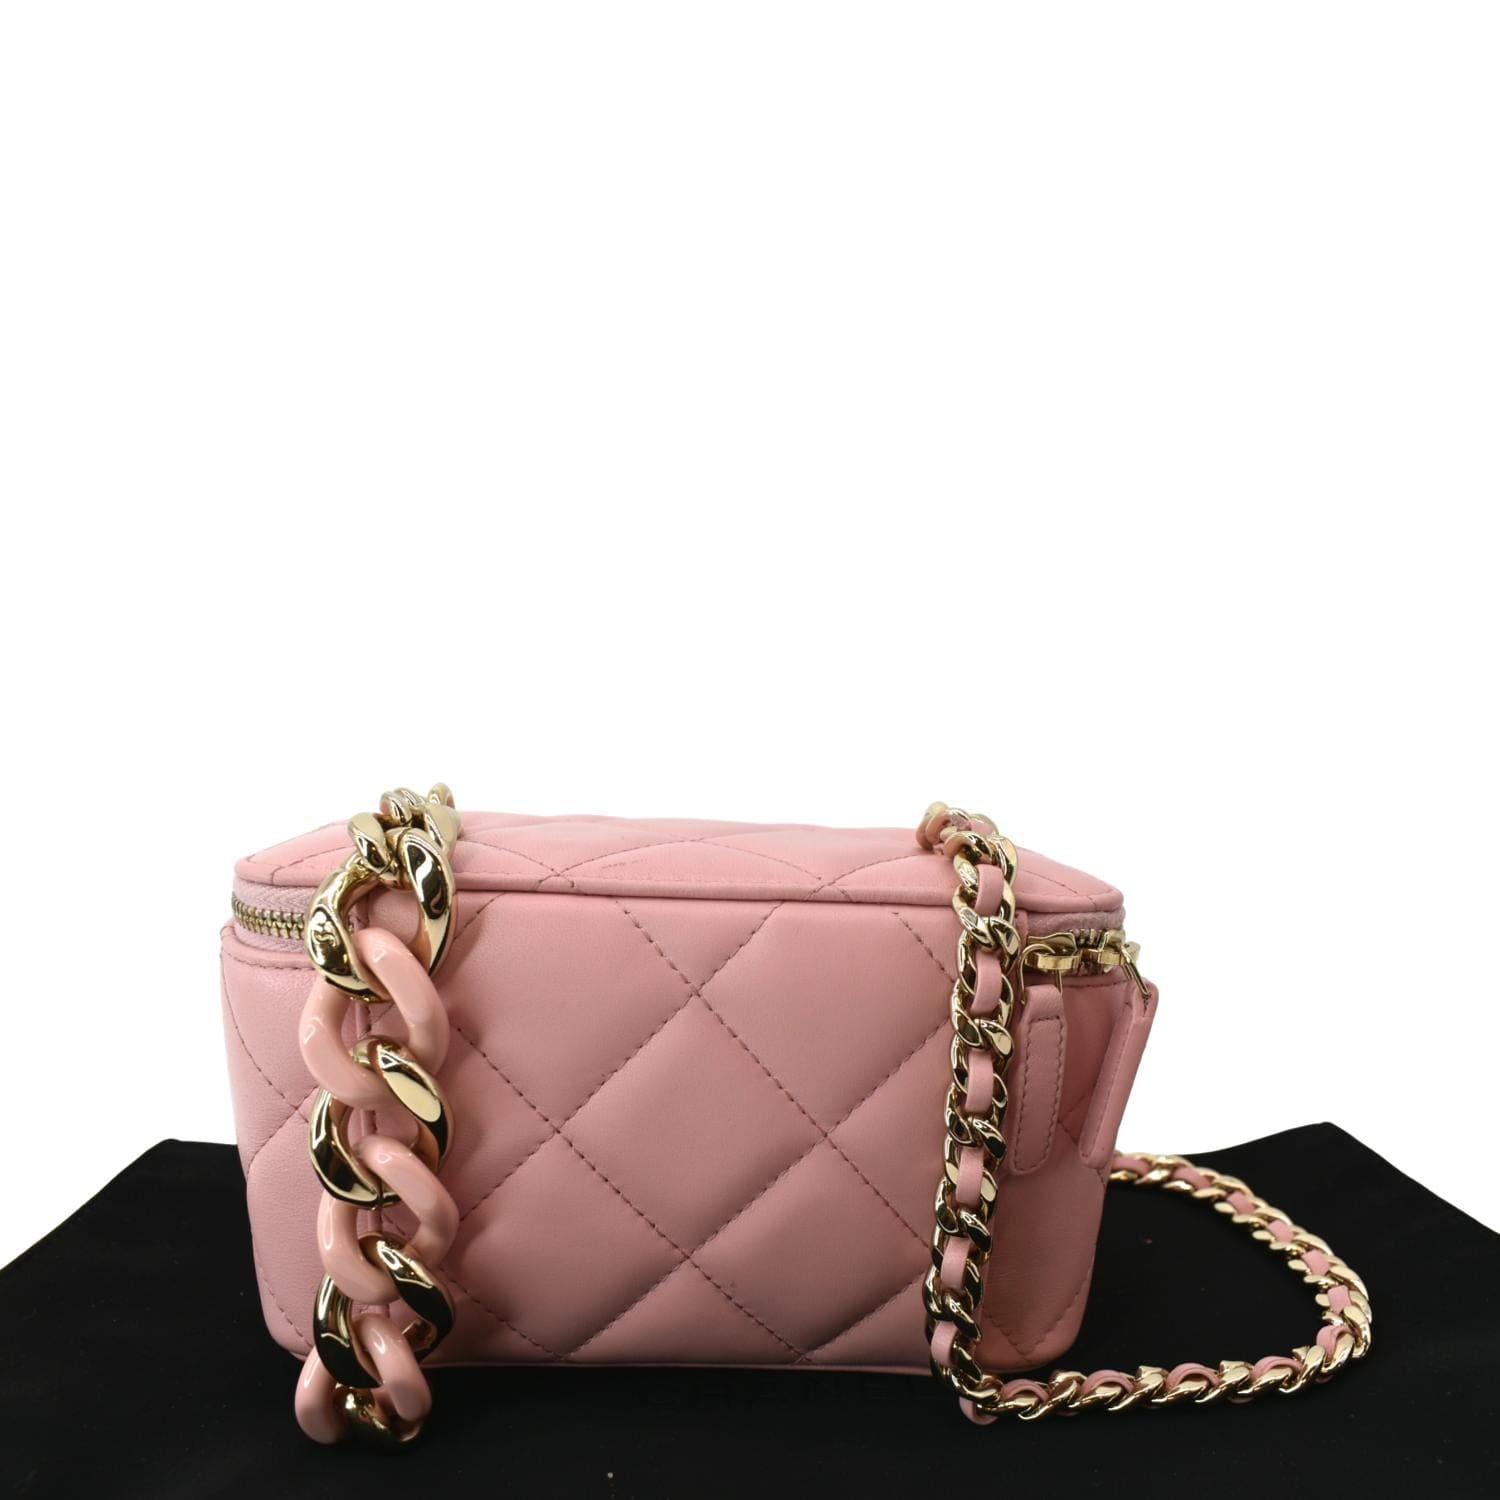 pink chanel vanity case handbag